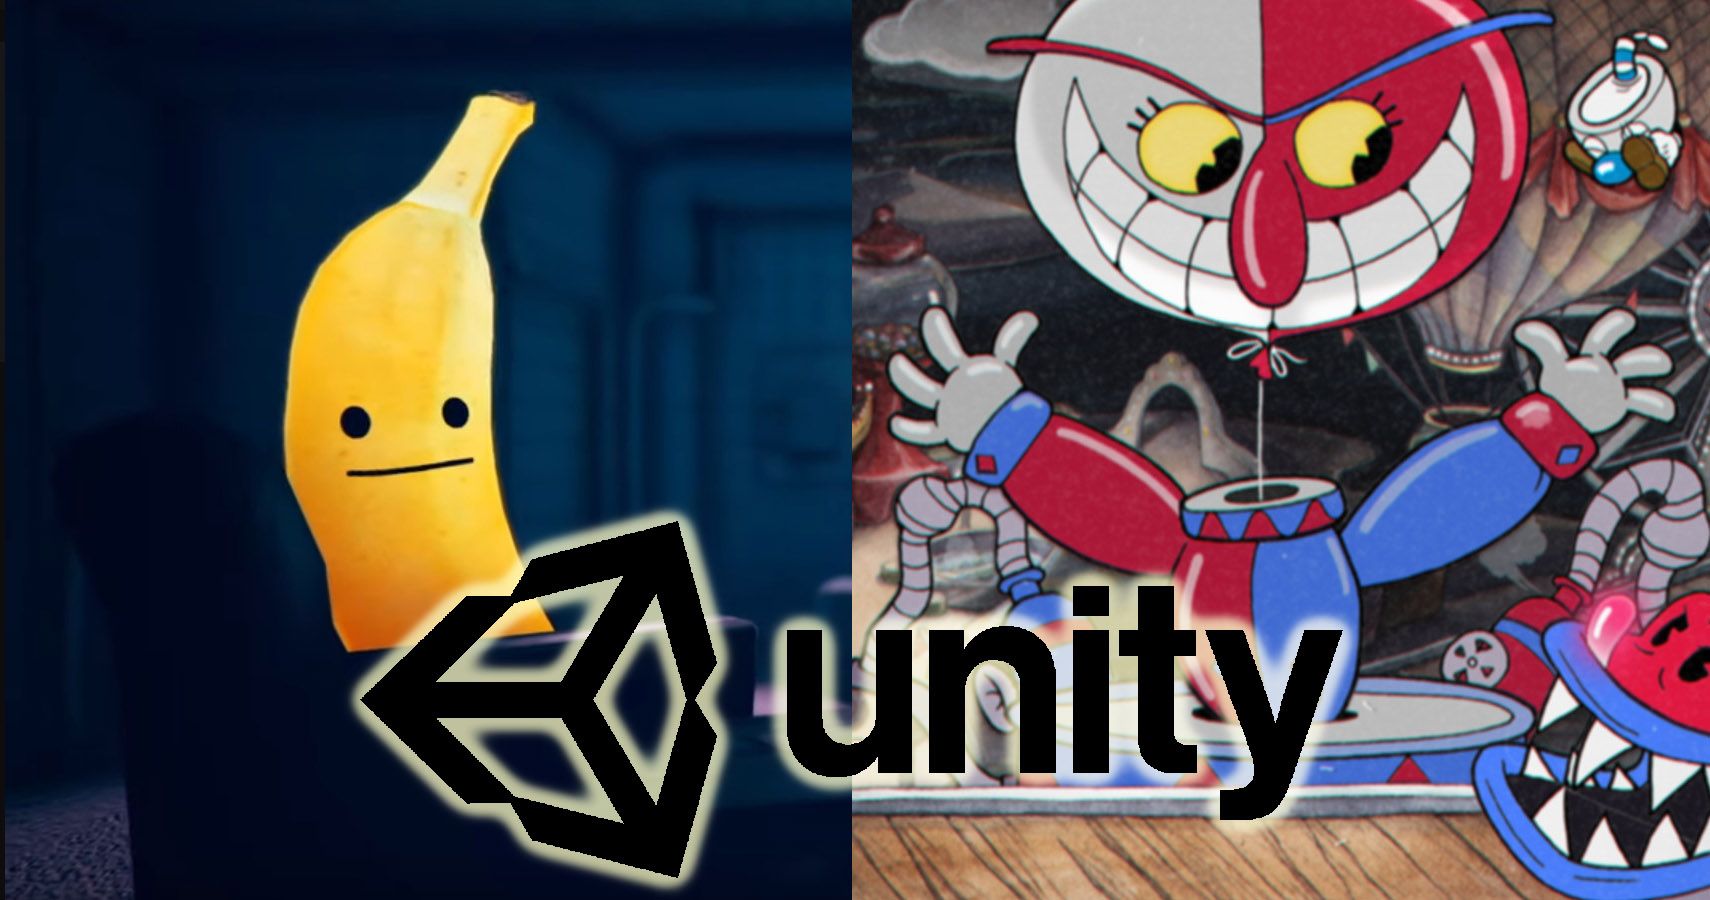 unity games list for mac